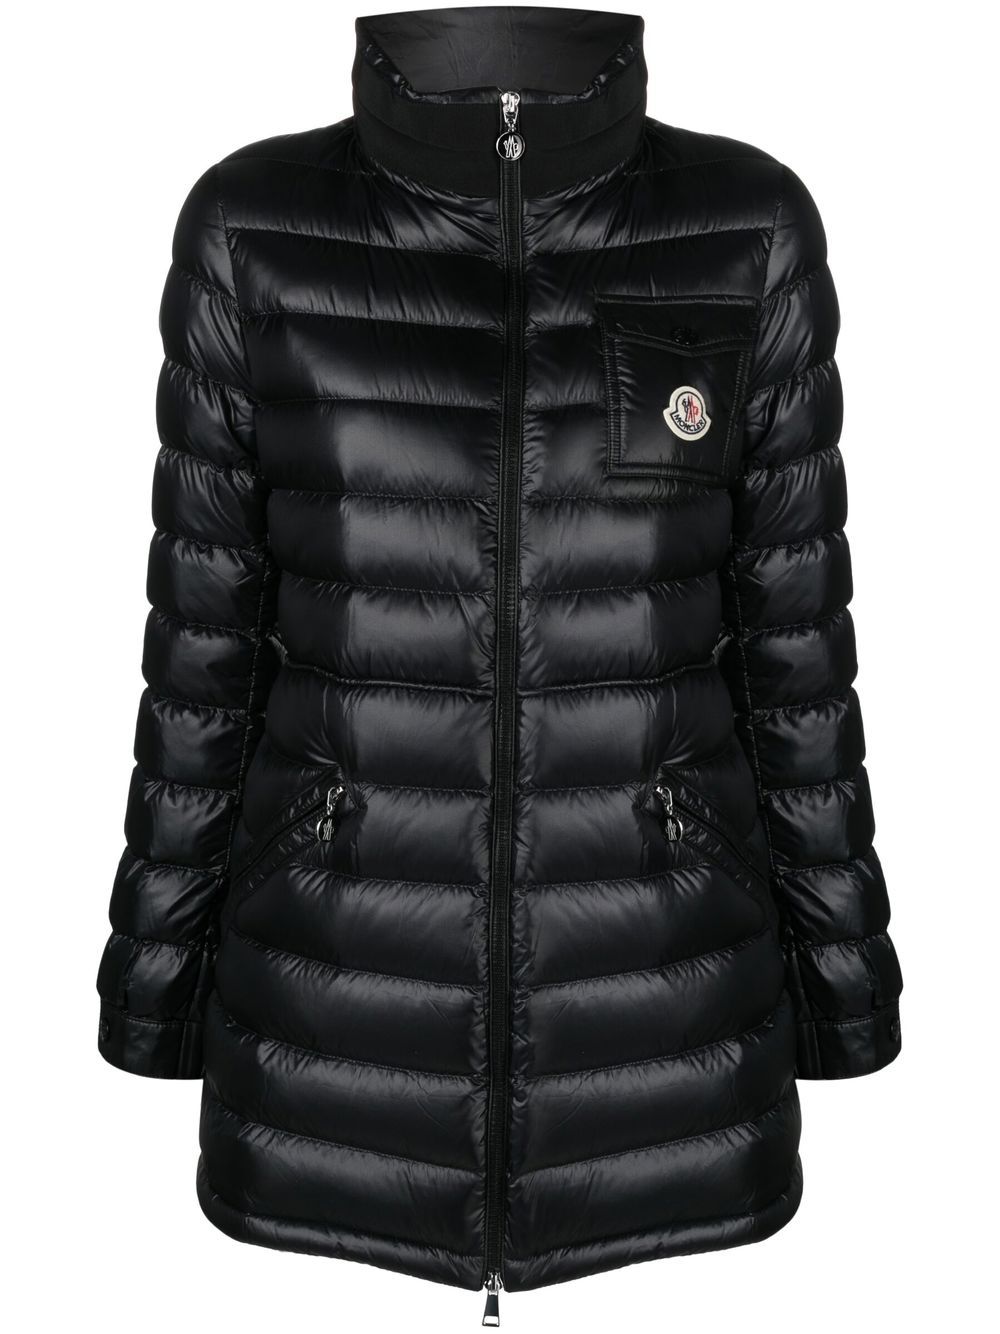 Windbreaker Stand Collar LV Chanel Autumn and Winter Zipper